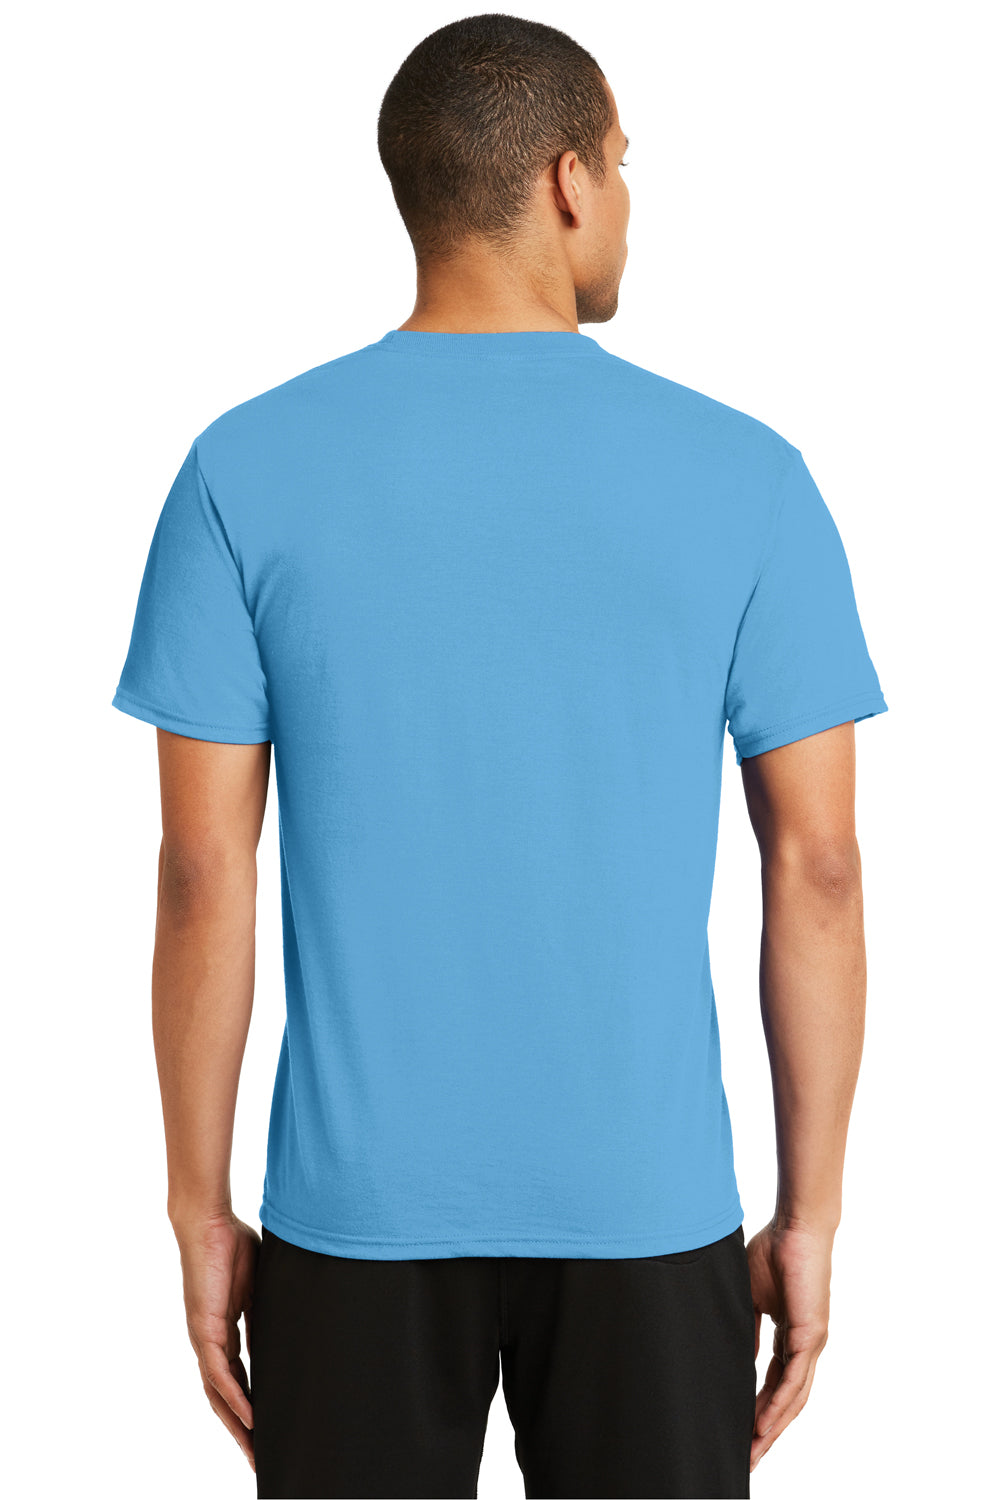 Port & Company PC381 Mens Dry Zone Performance Moisture Wicking Short Sleeve Crewneck T-Shirt Aqua Blue Back